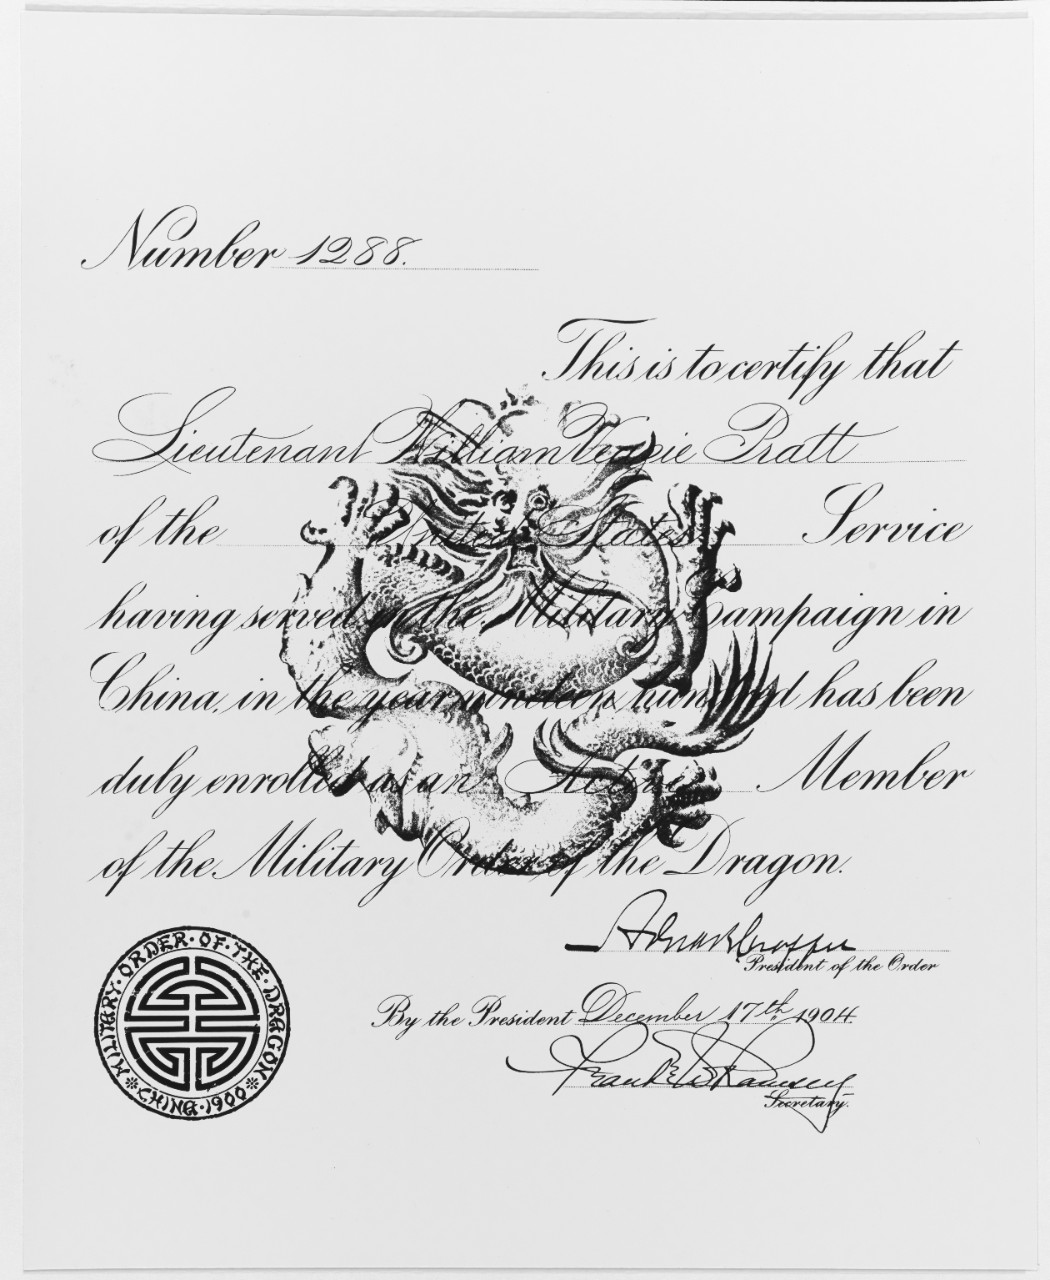 Certificate presented to Lieutenant William V. Pratt, USN